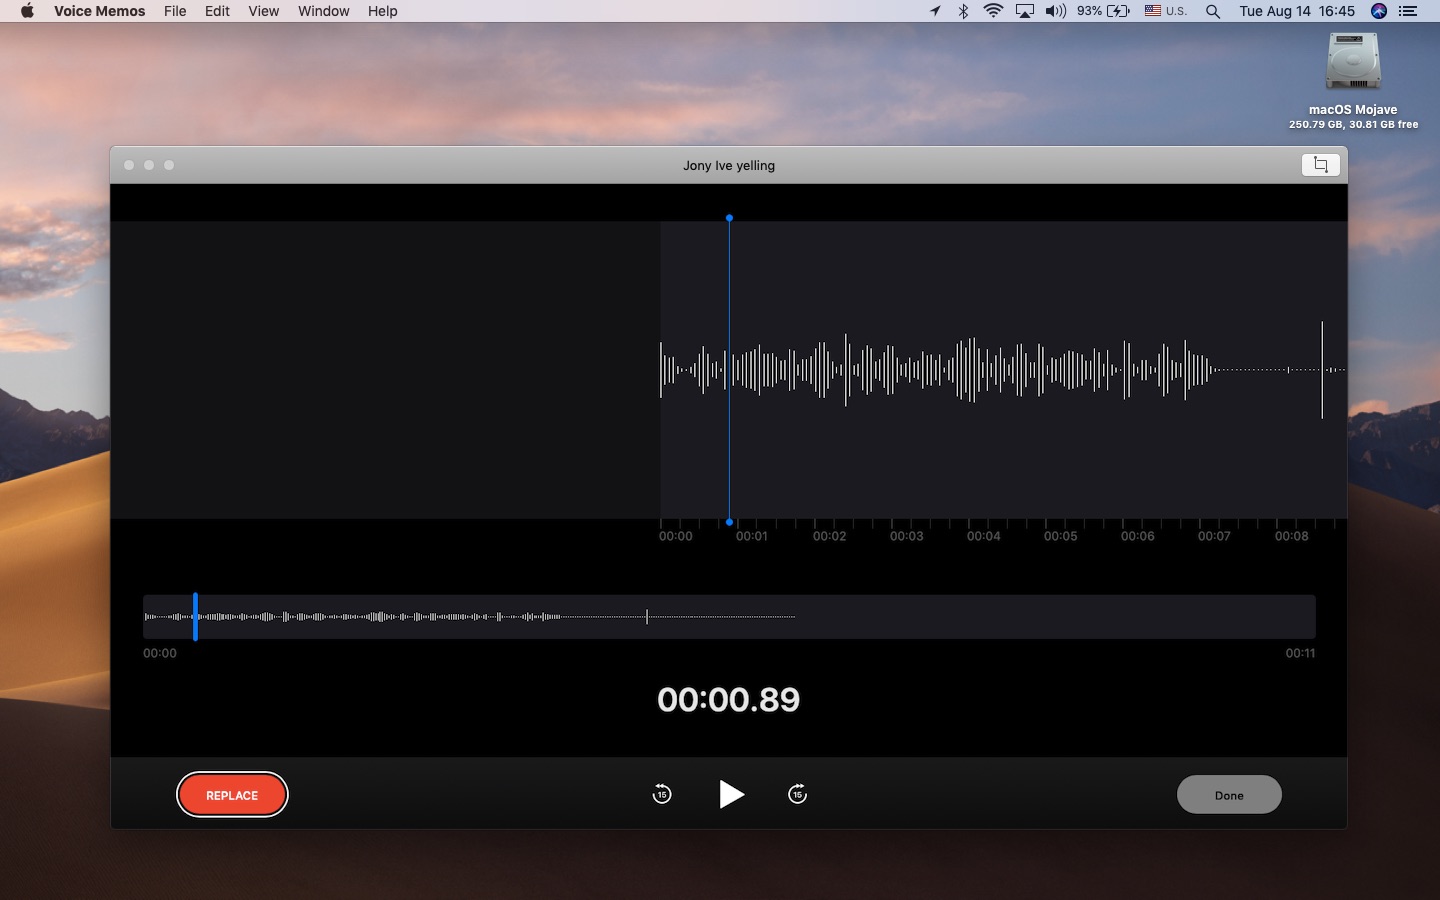 How to use Apple's Voice Memos app on Mac